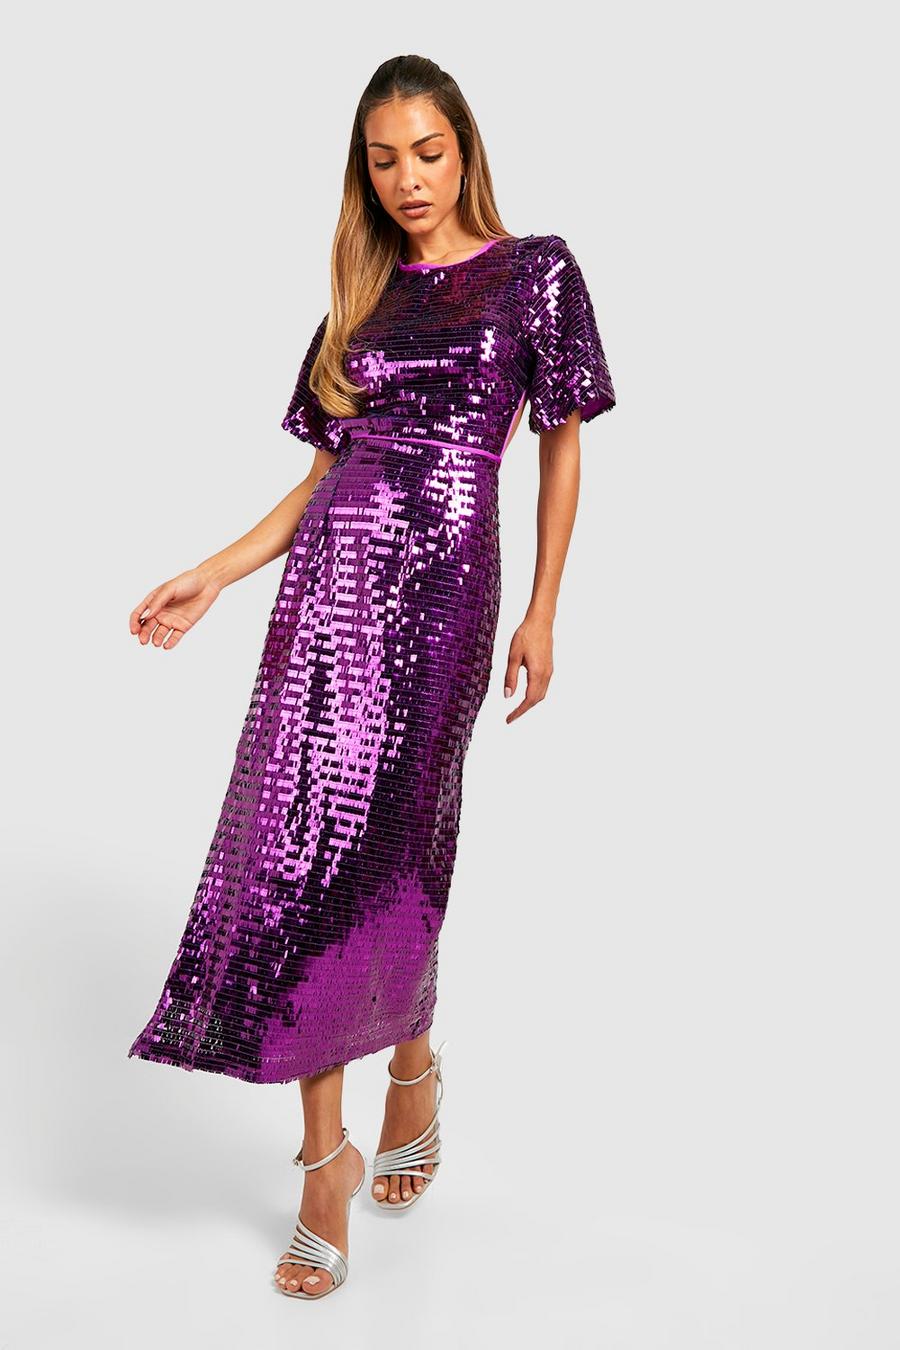 Jewel purple Sequin Angel Sleeve Cut Out Midi Party Dress